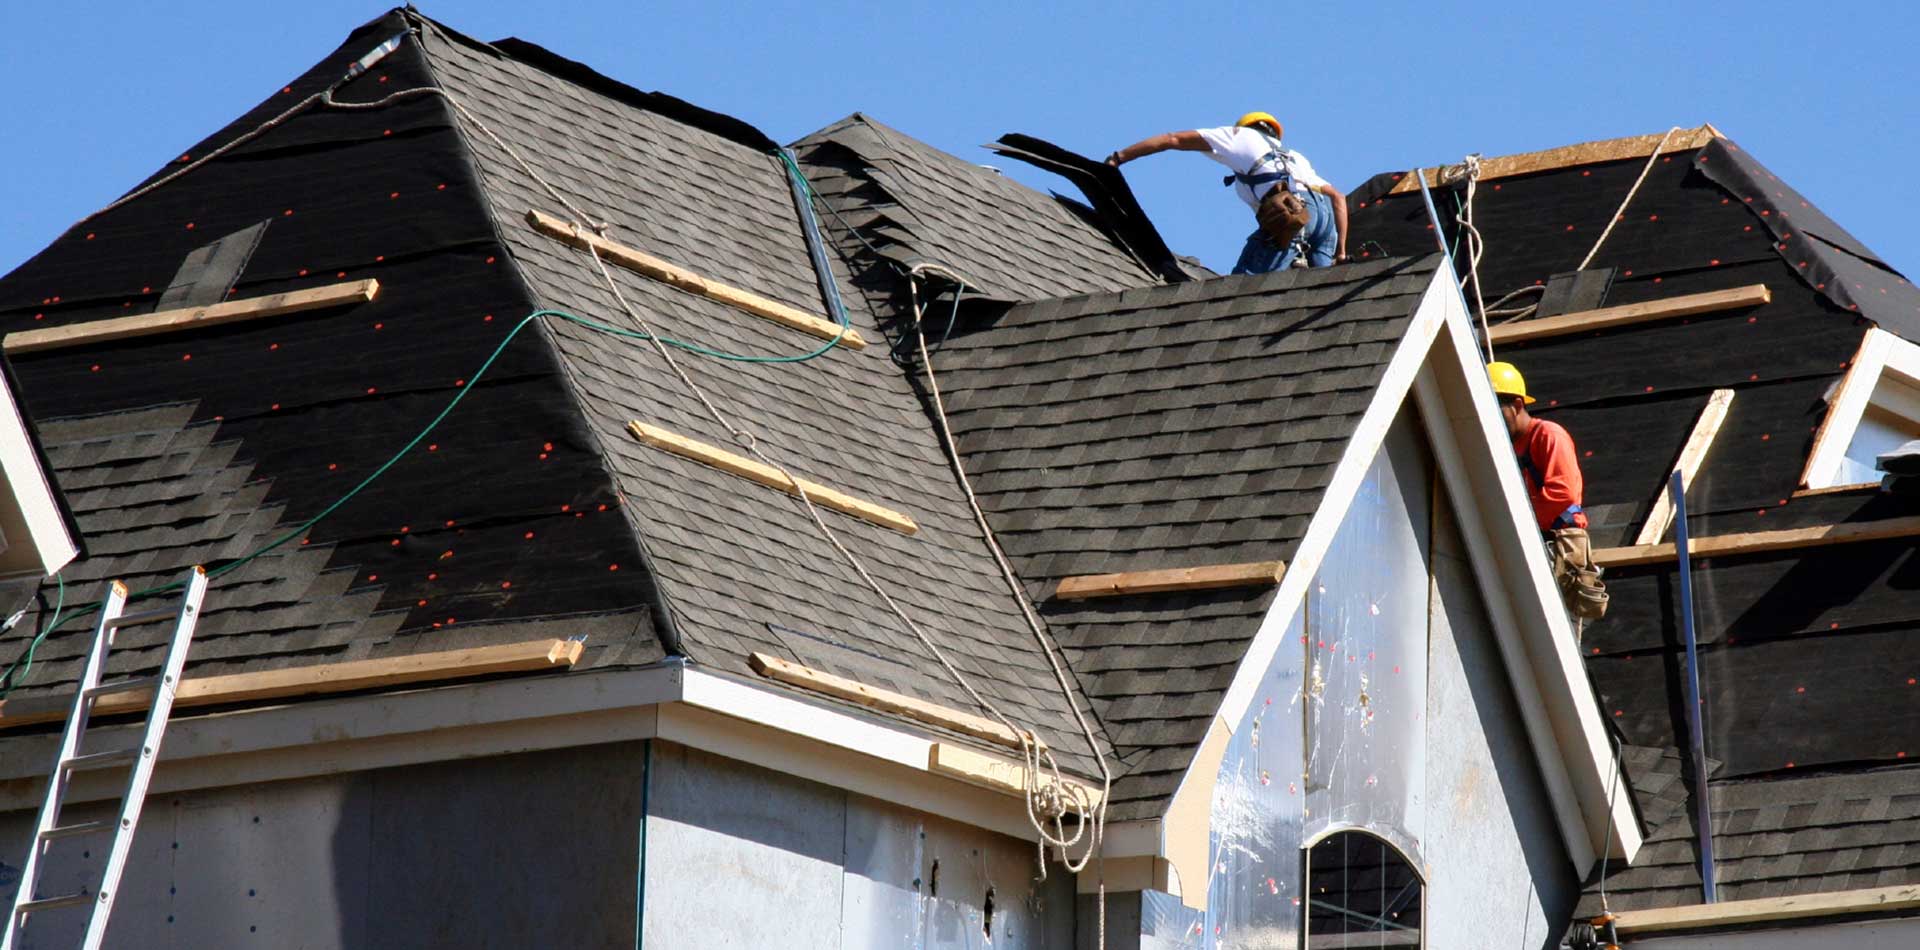 Best Roofing Company in Orange County - Semper Solaris